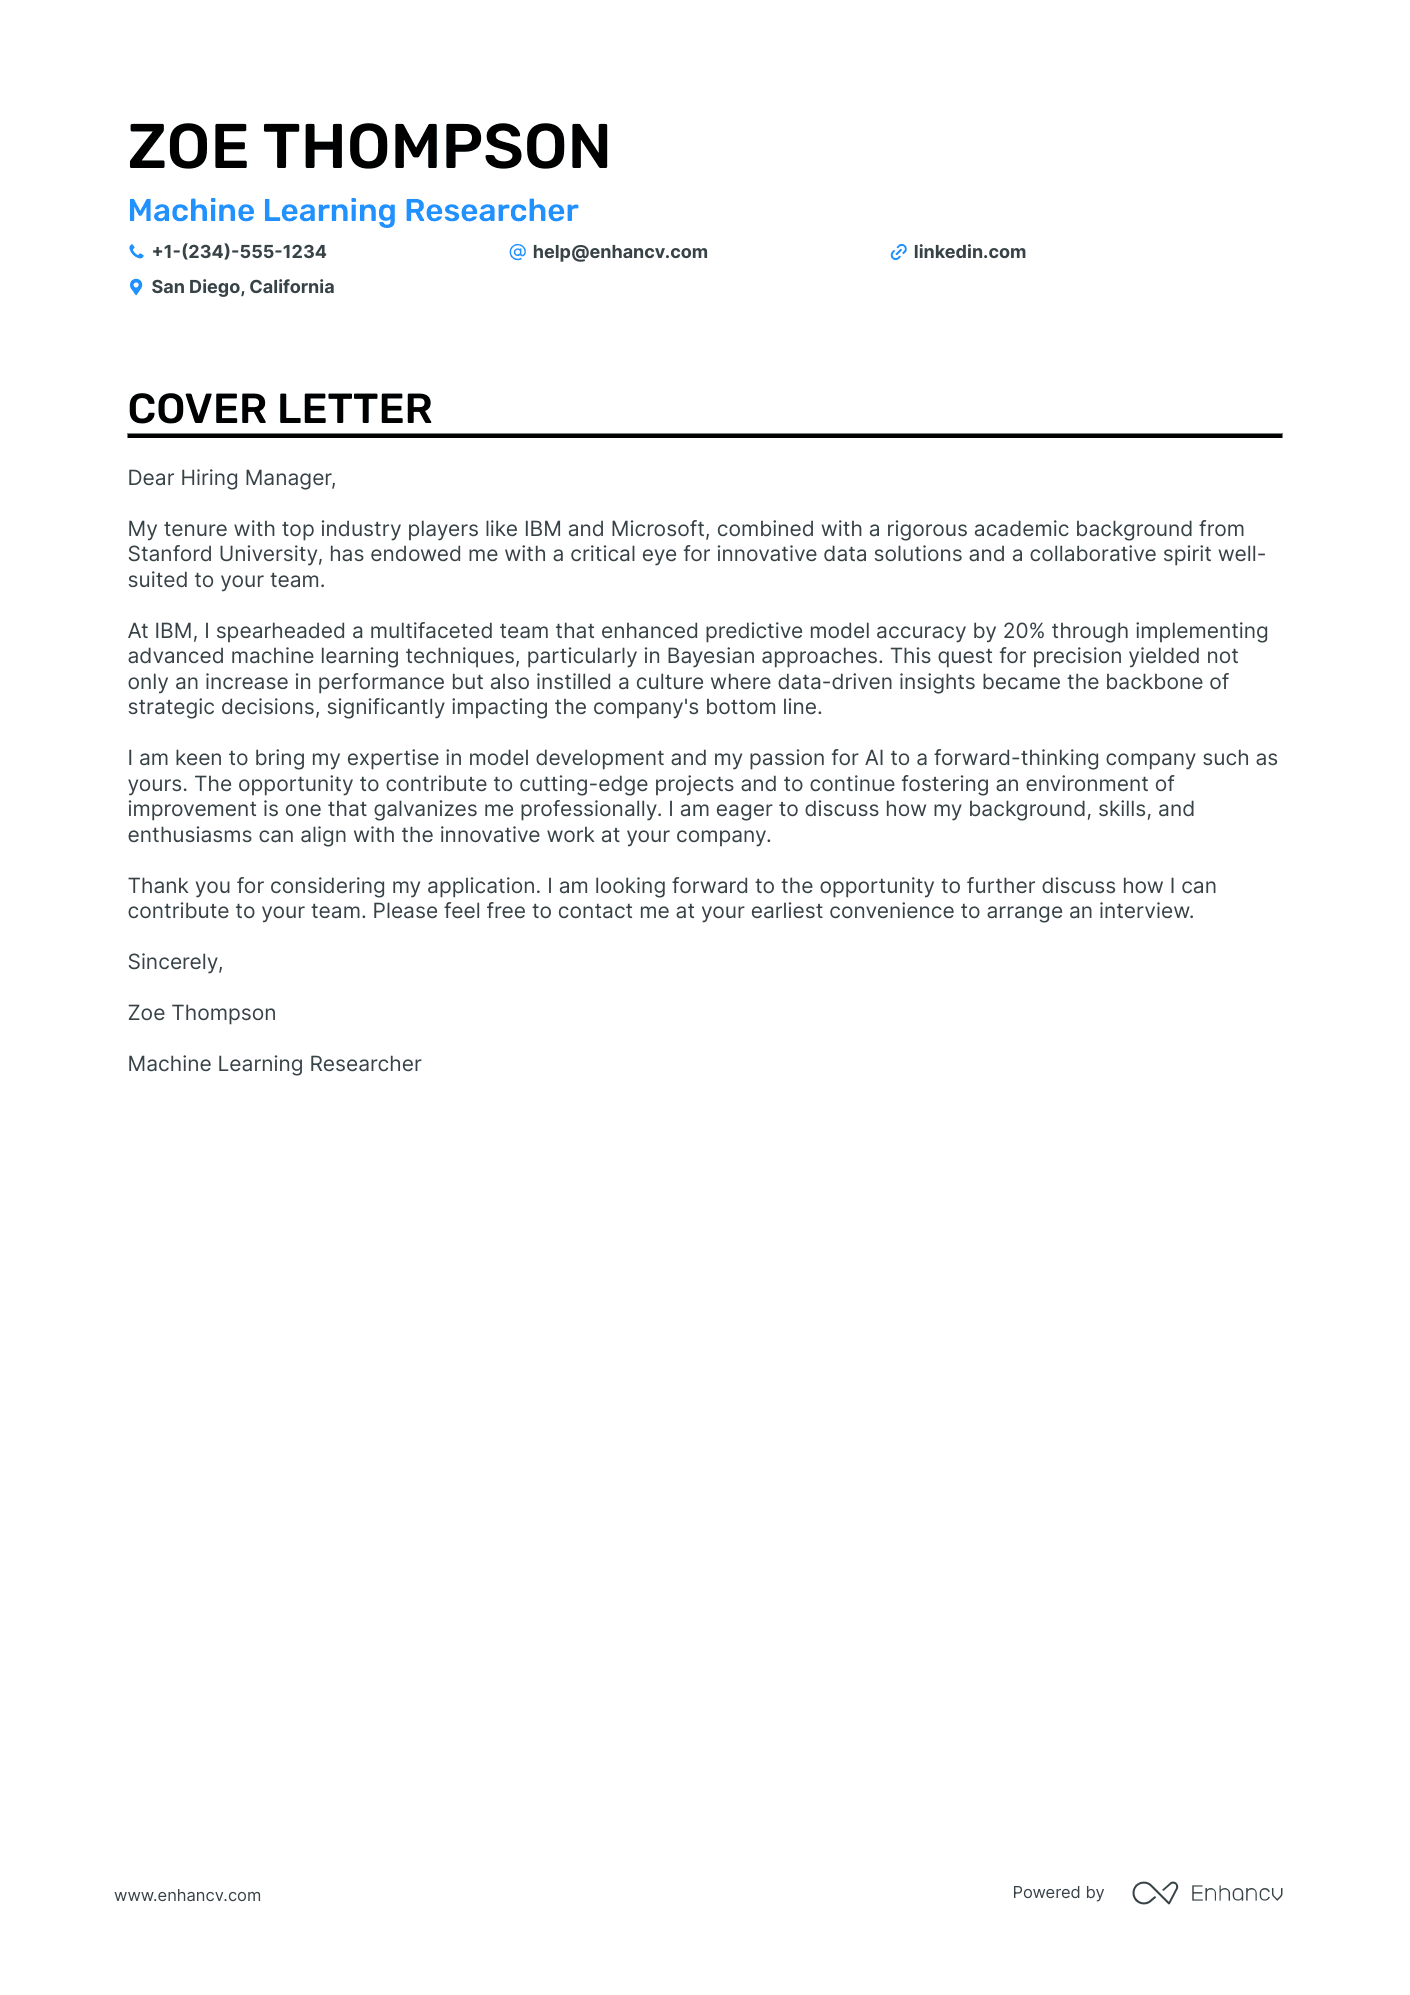 cover letter sample for researcher job